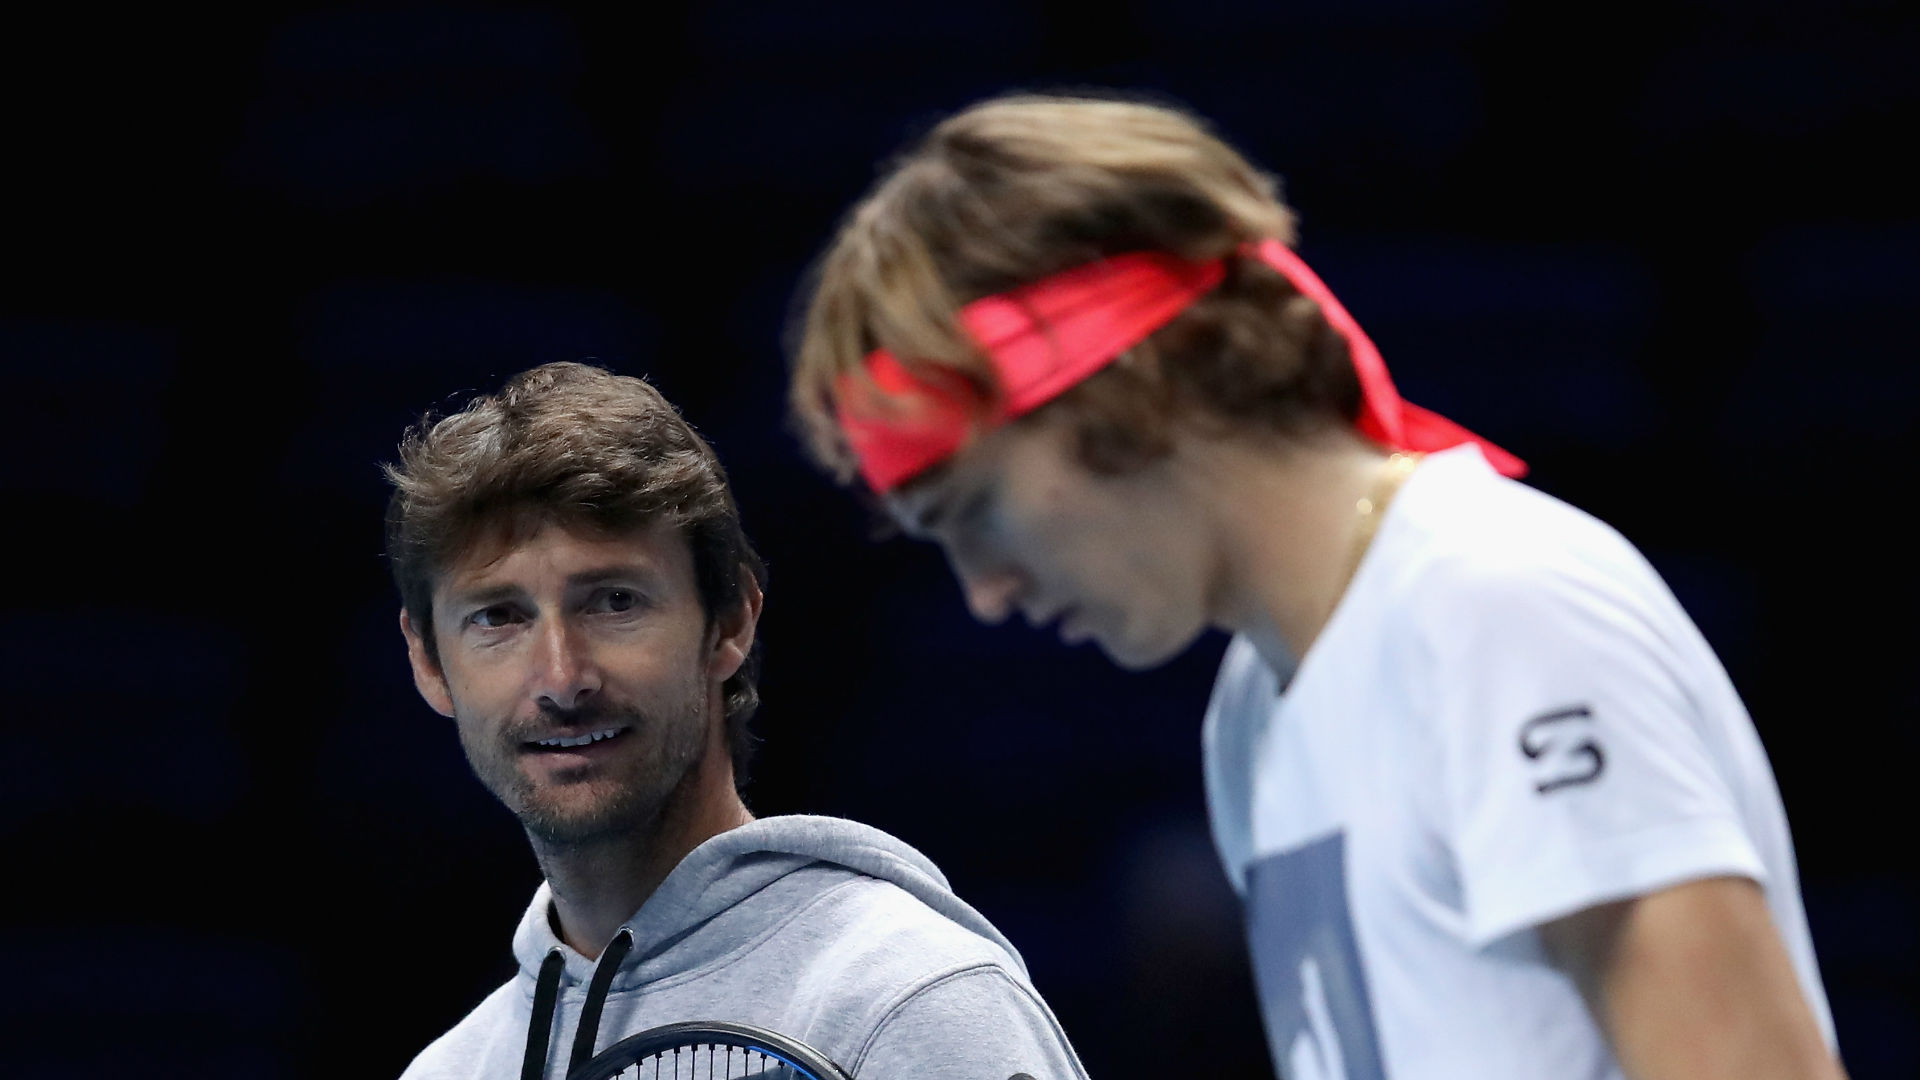 An argument at the Australian Open resulted in Juan Carlos Ferrero leaving Alexander Zverev's coaching team, the German has confirmed.